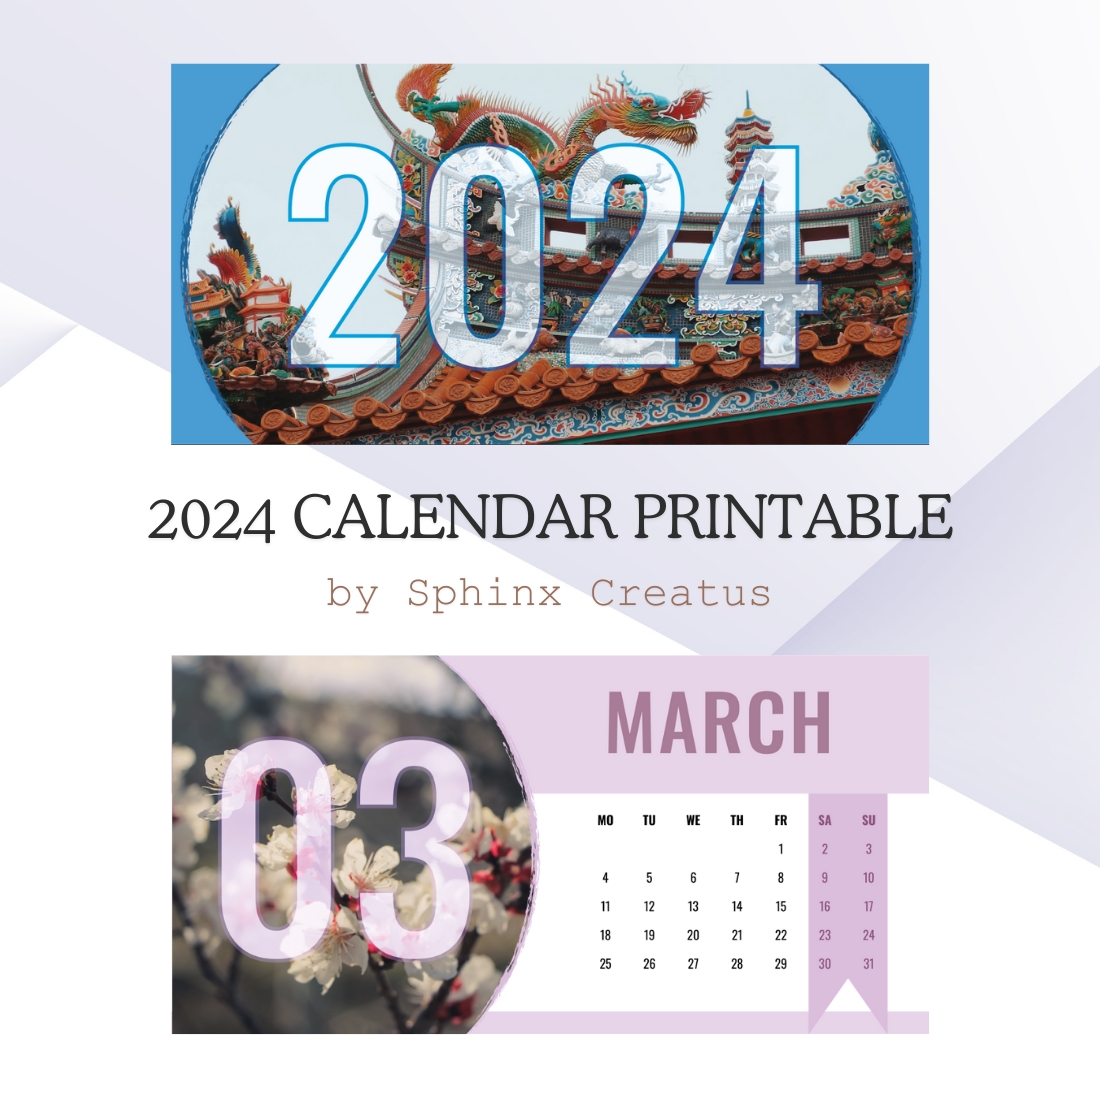 Desk Calendar 2024 Template - MasterBundles